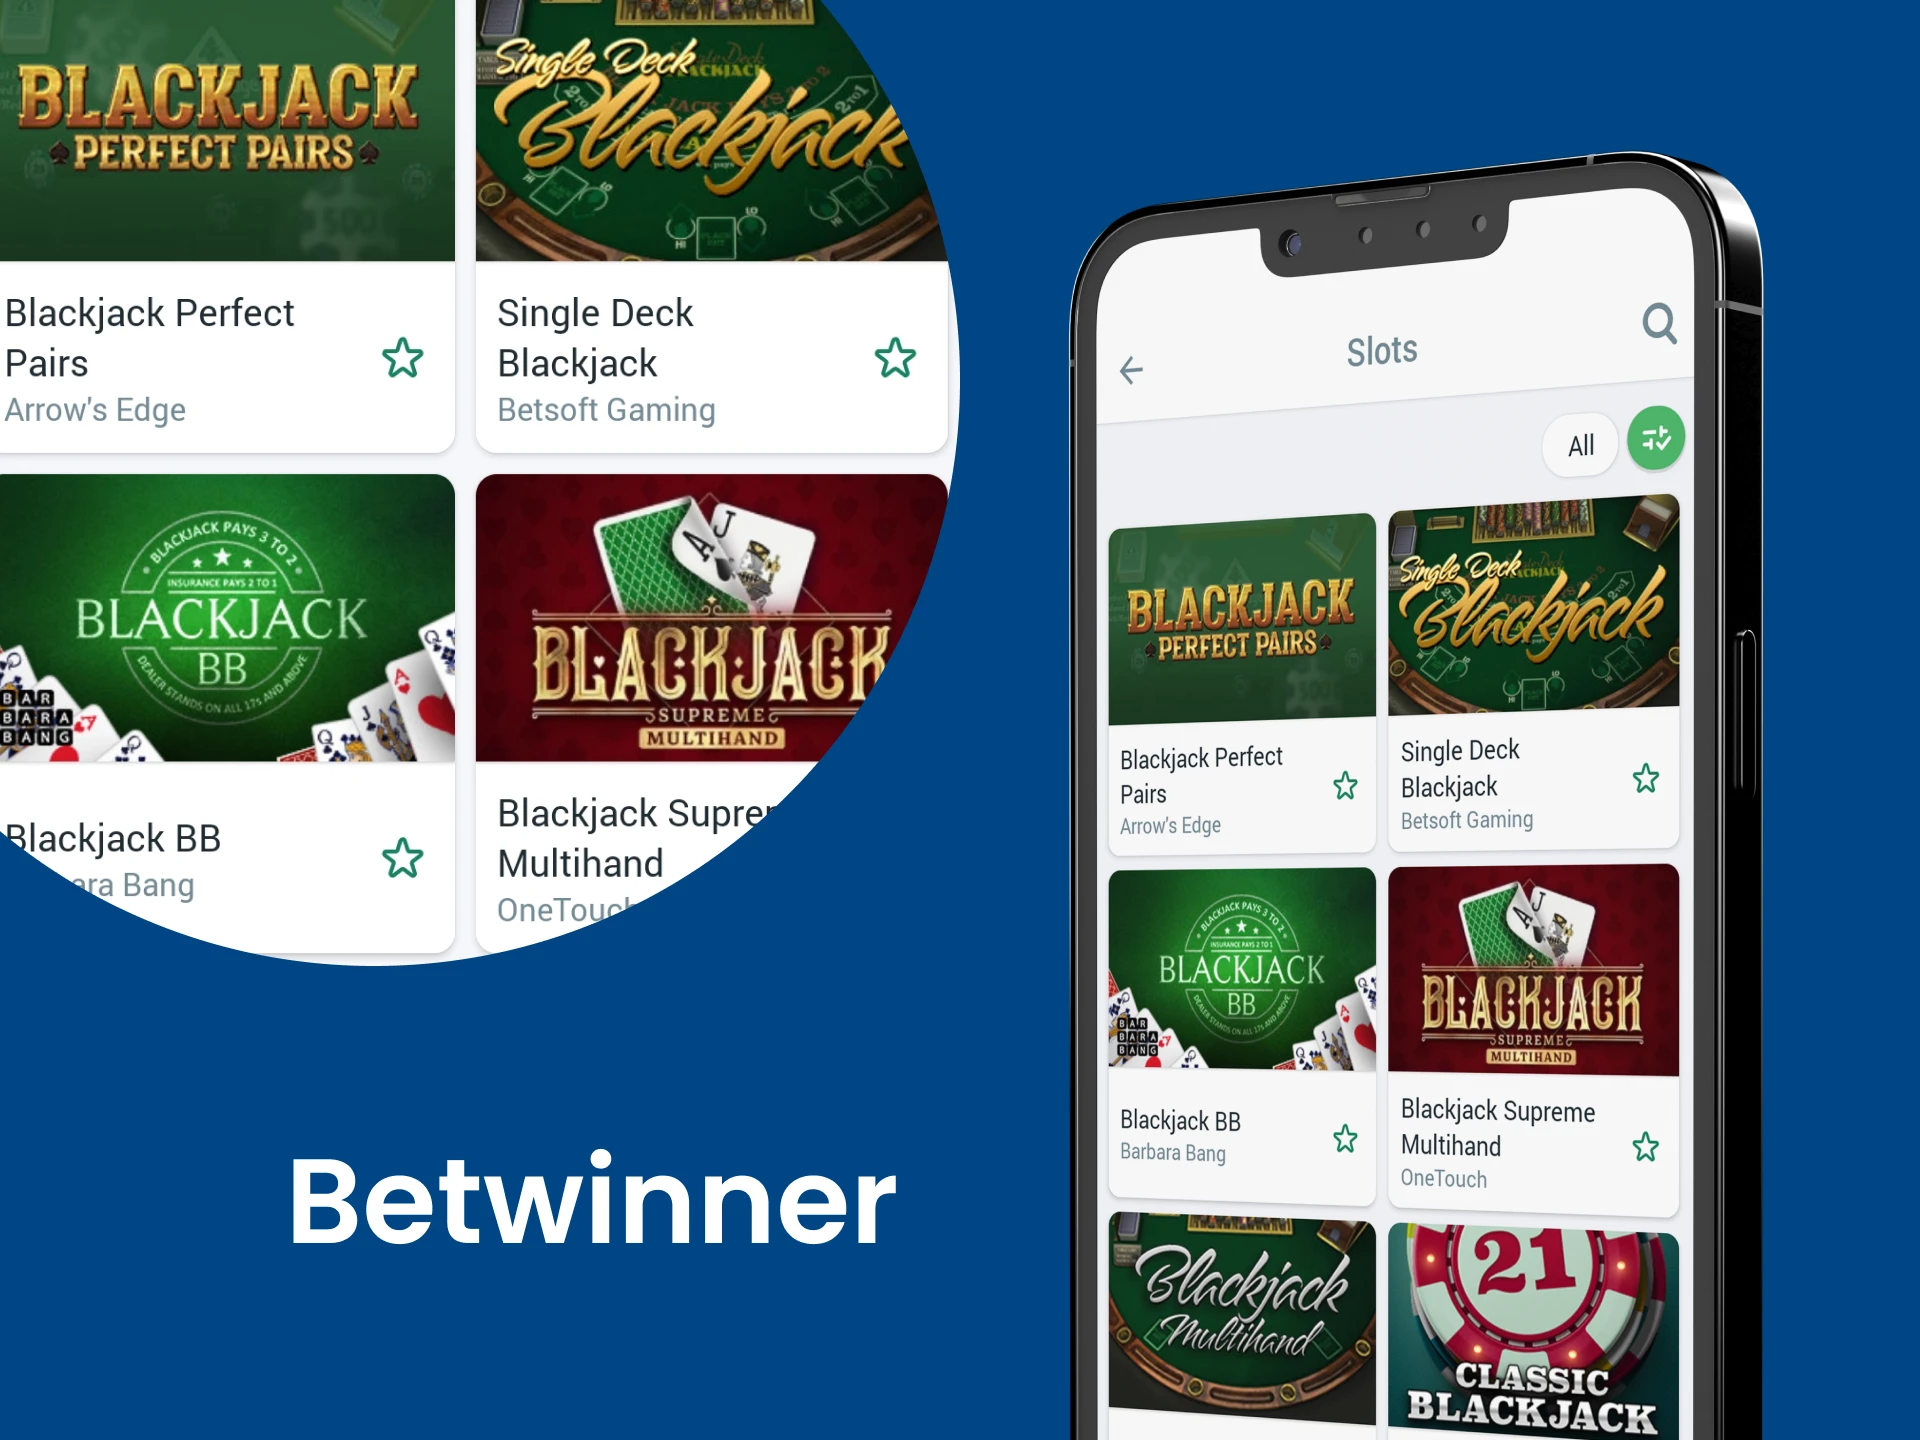 To play BlackJack, choose the Betwinner application.